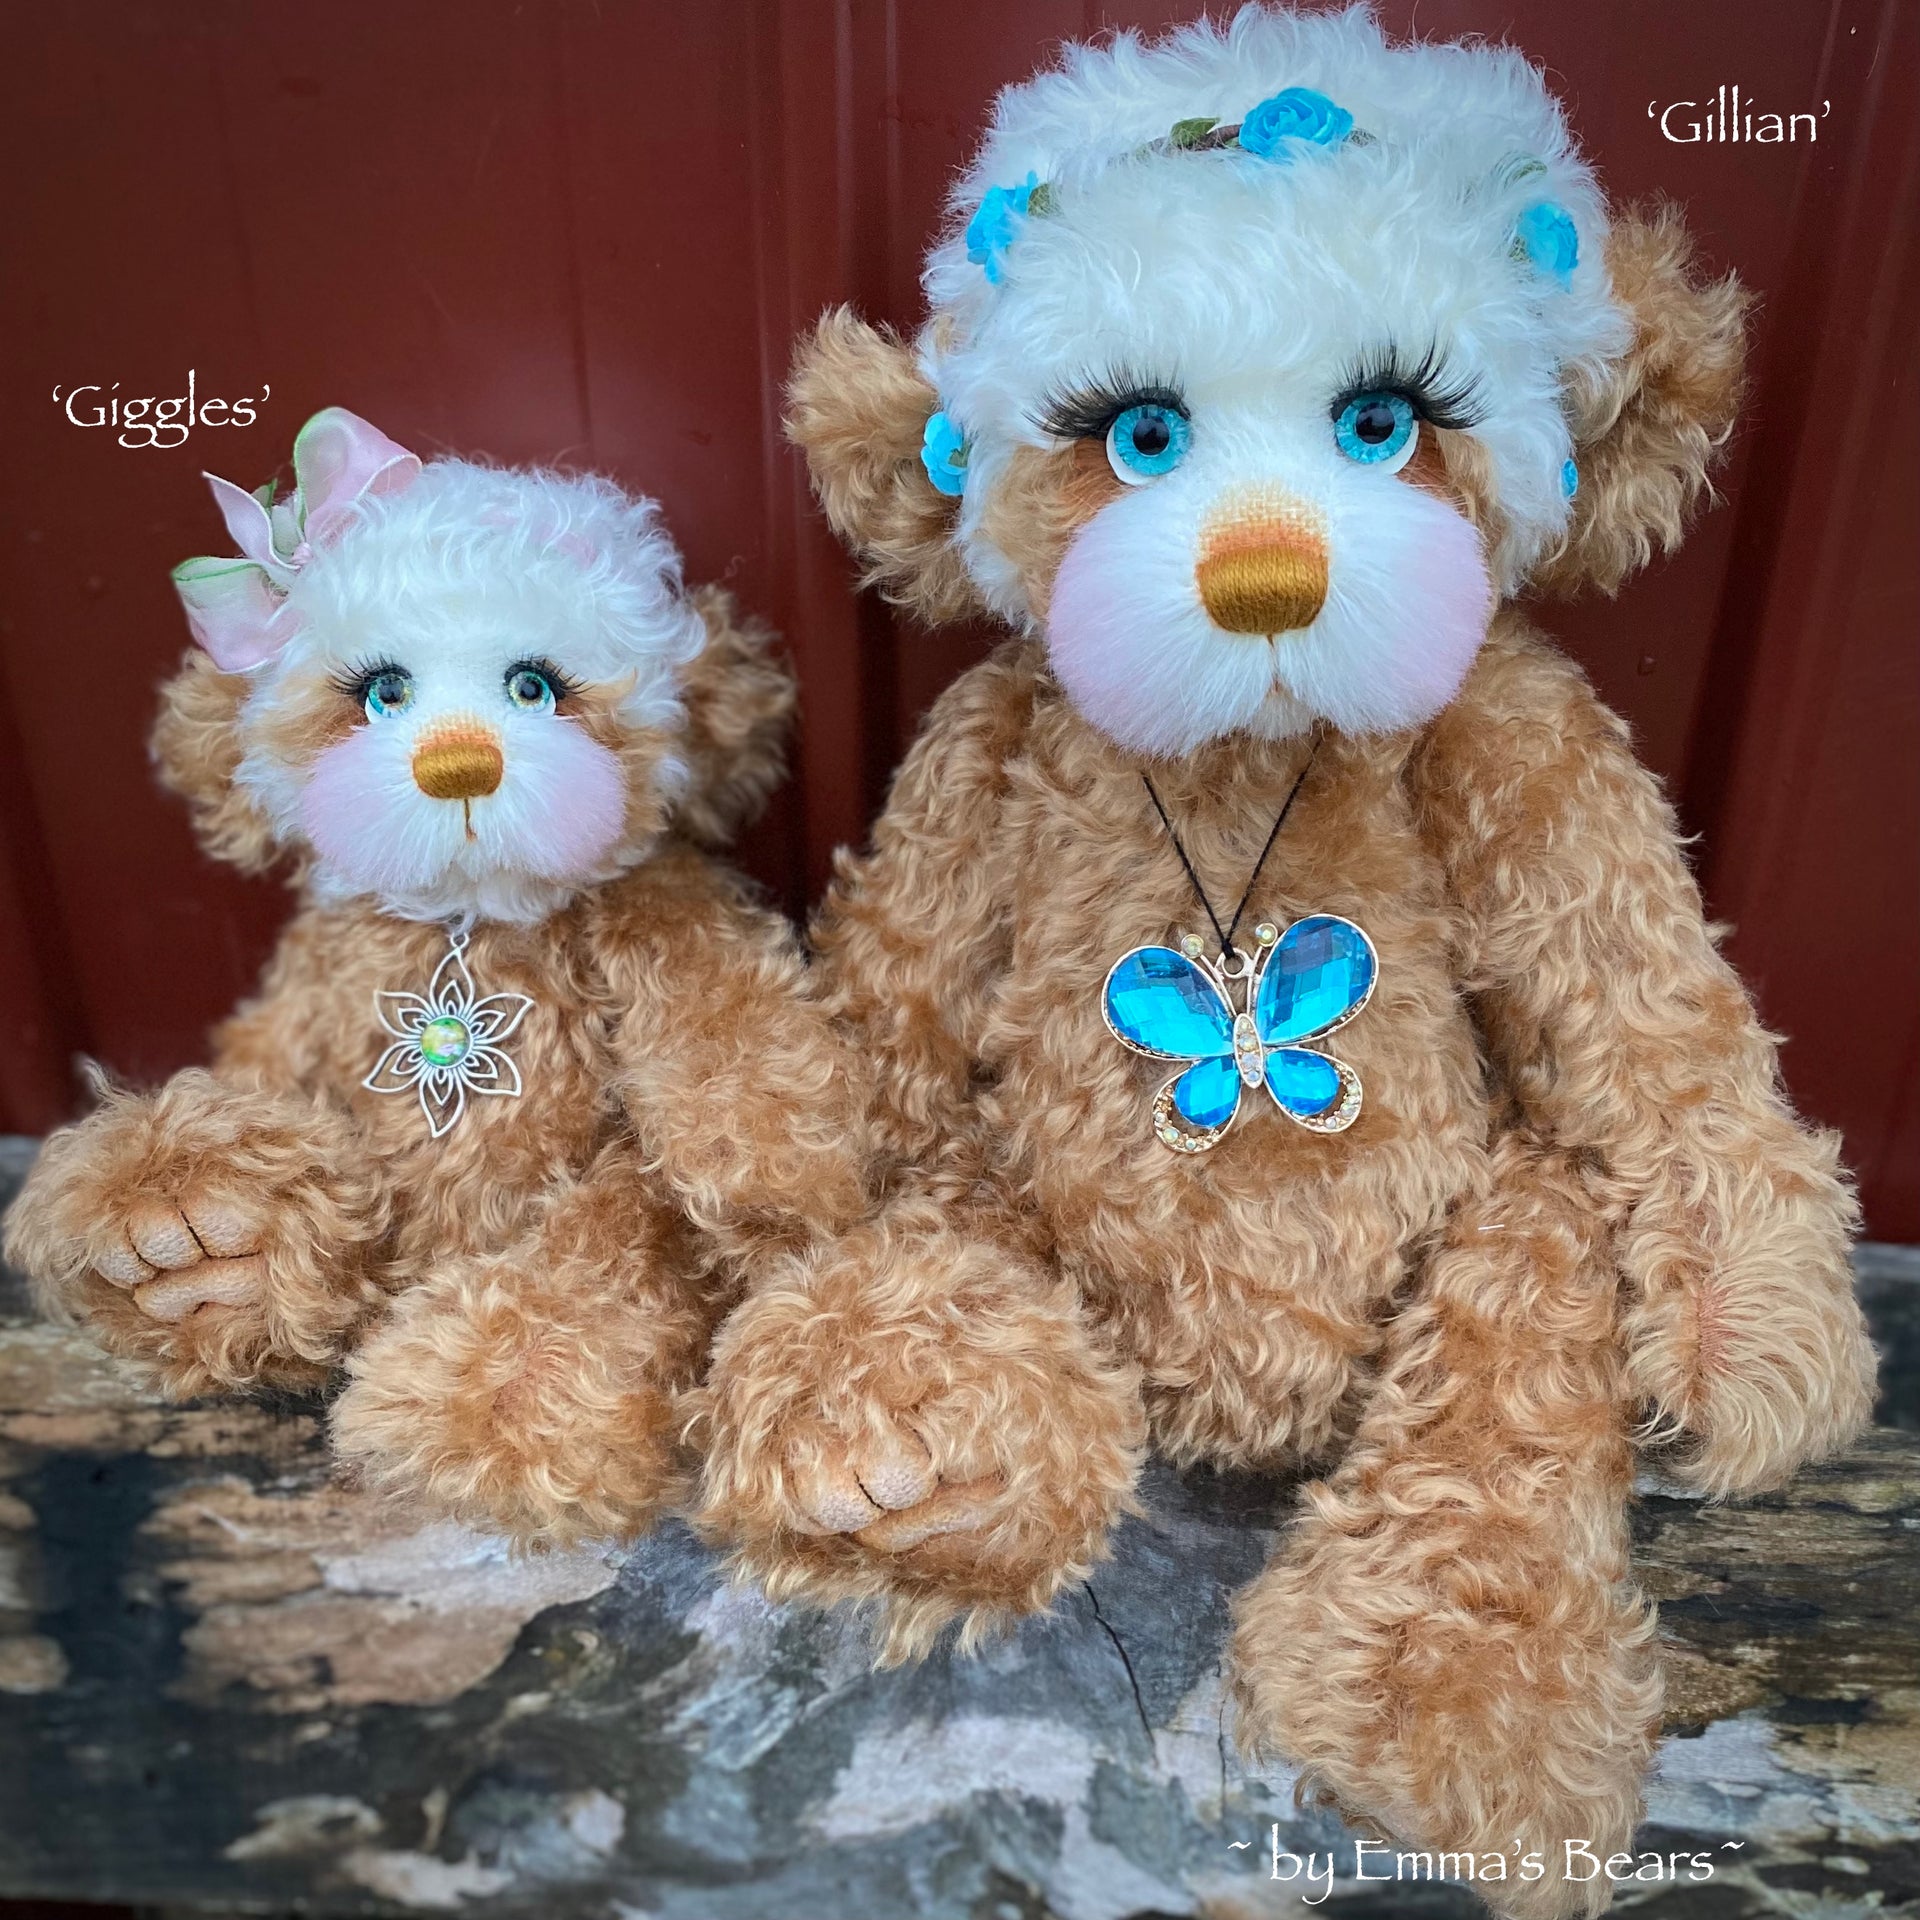 Giggles - 12" Curly Kid Mohair and Alpaca artist bear by Emma's Bears - OOAK